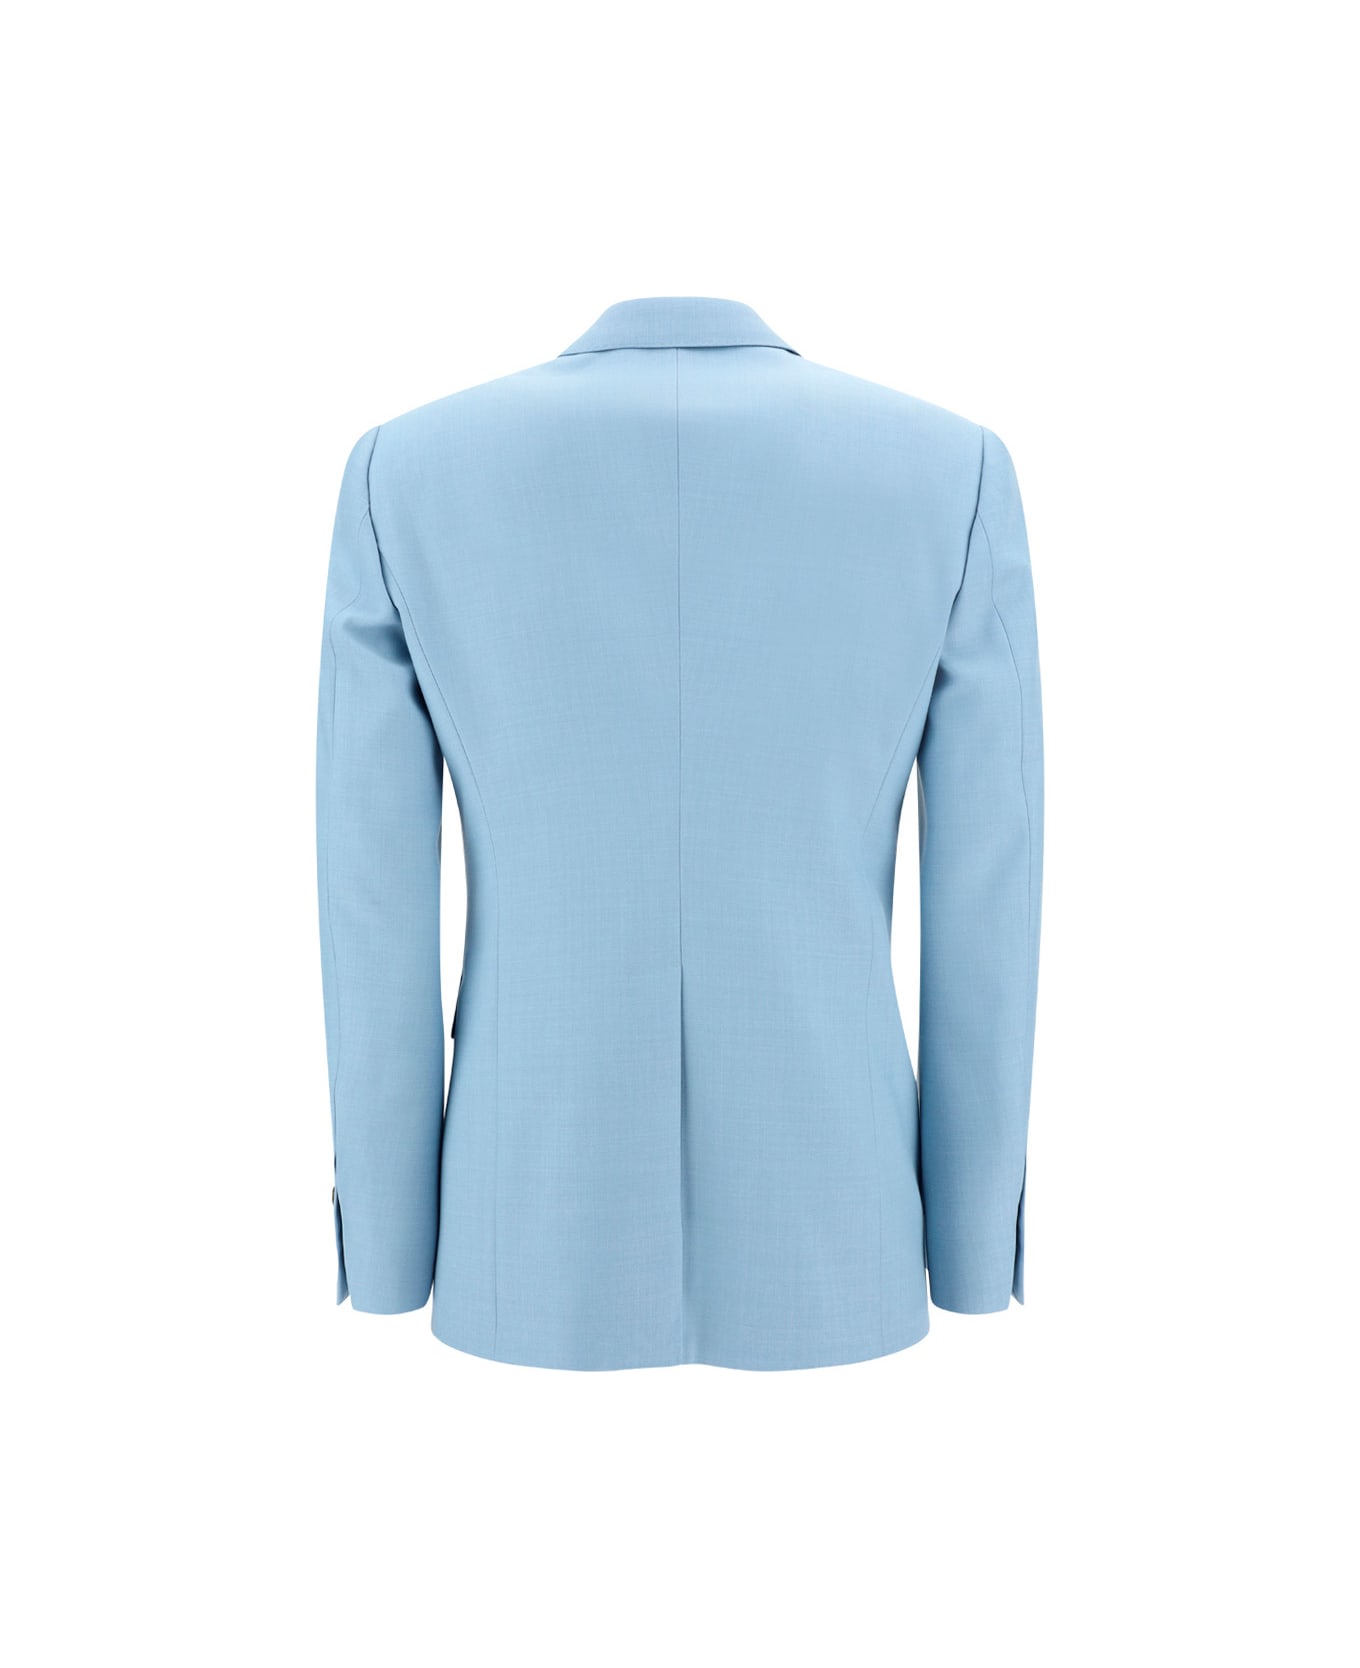 Alexander McQueen Neat Blazer Jacket - Pale Blue